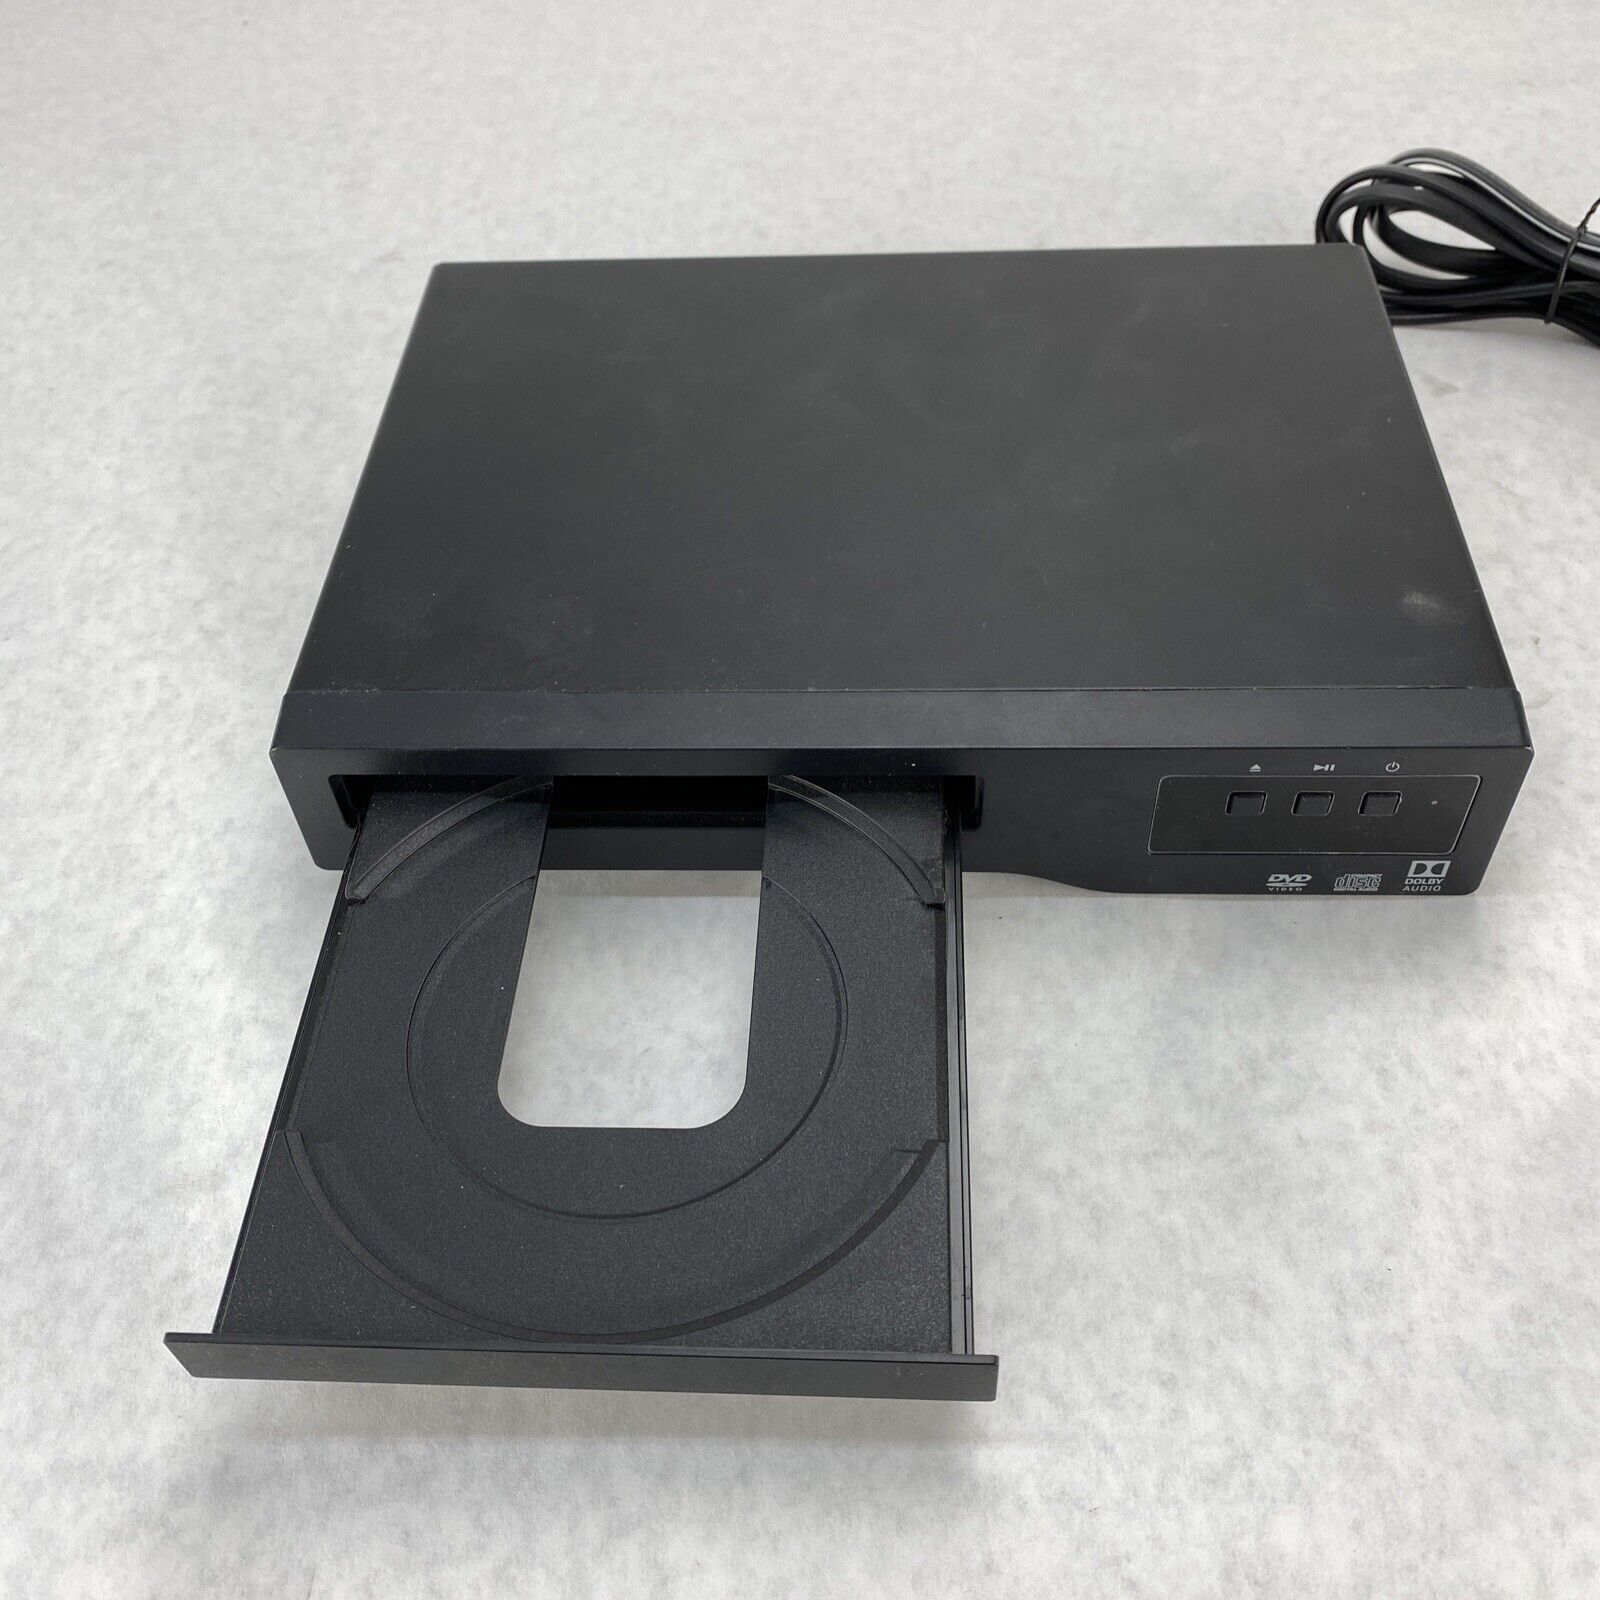 Sanyo FWDP105F Compact Minimalist DVD Player